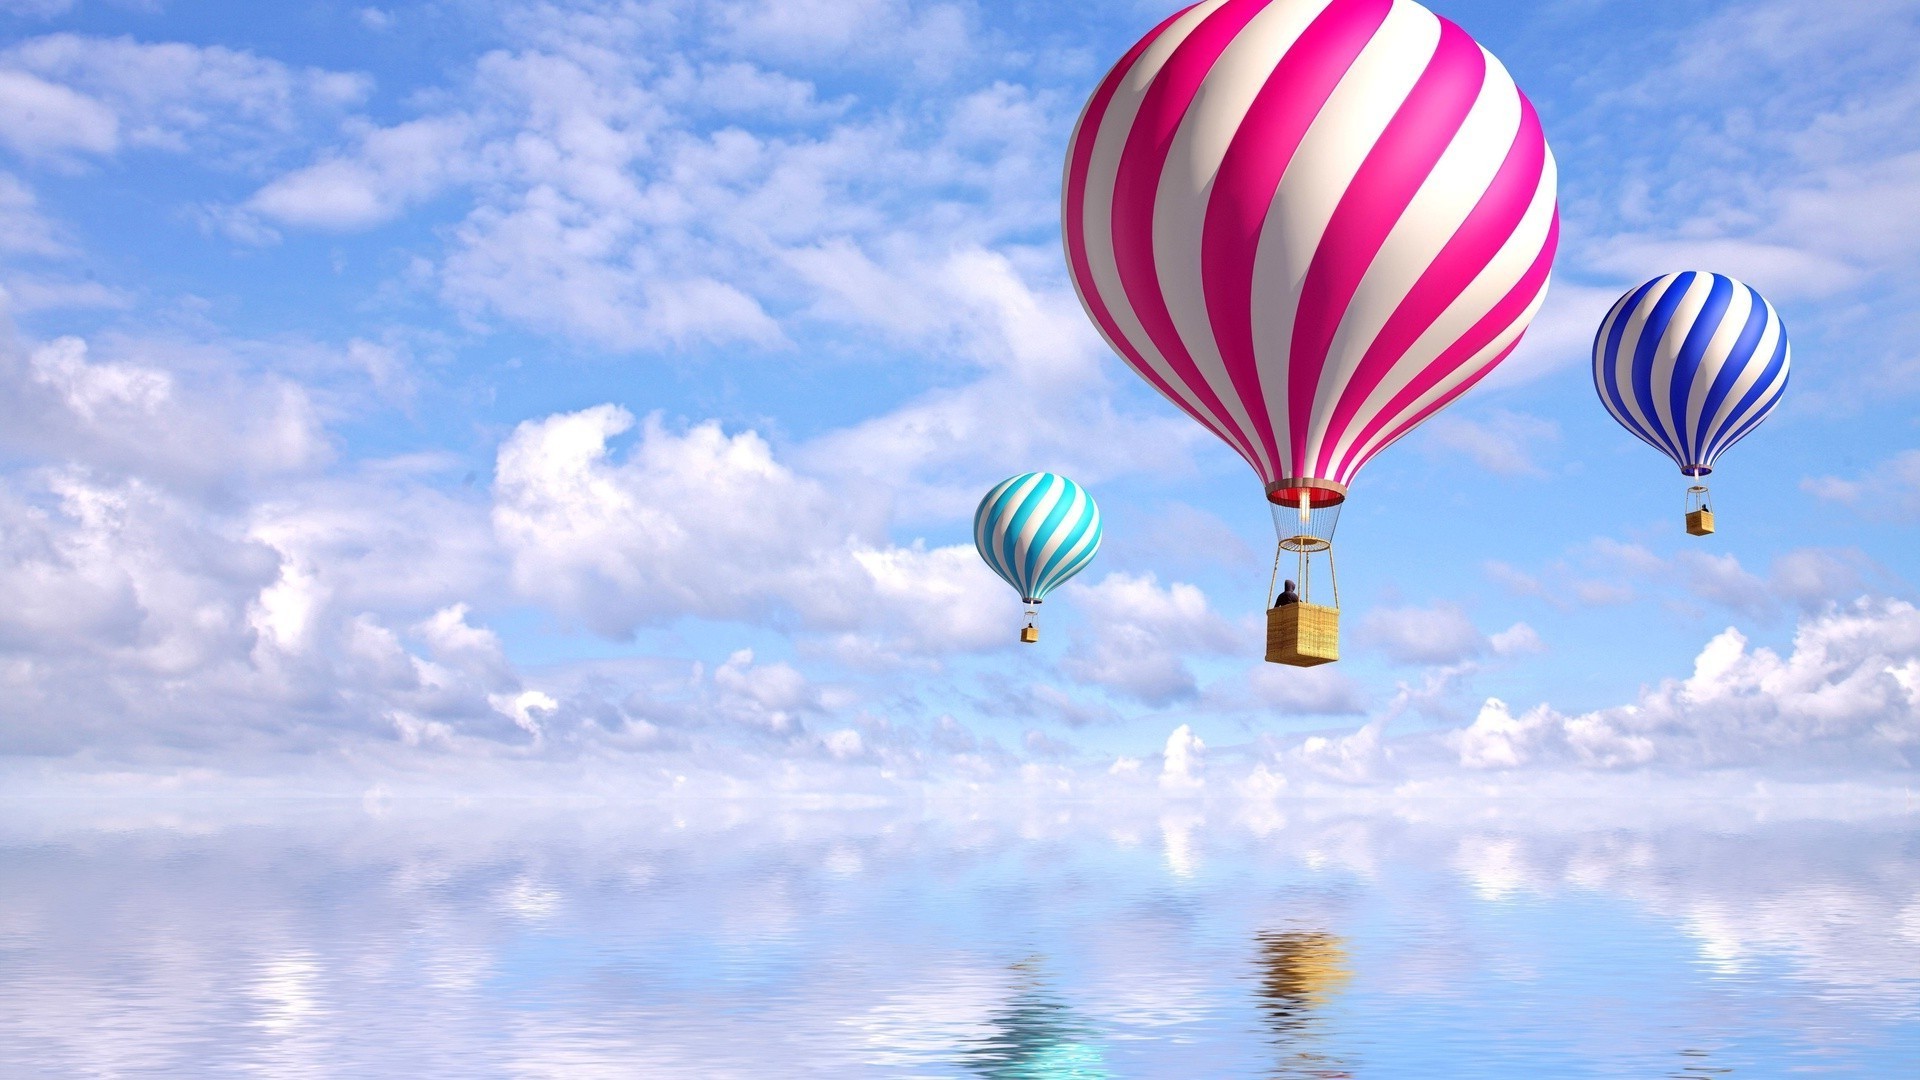 the sky balloon sky freedom air travel hot-air balloon outdoors adventure flight summer wind transportation system